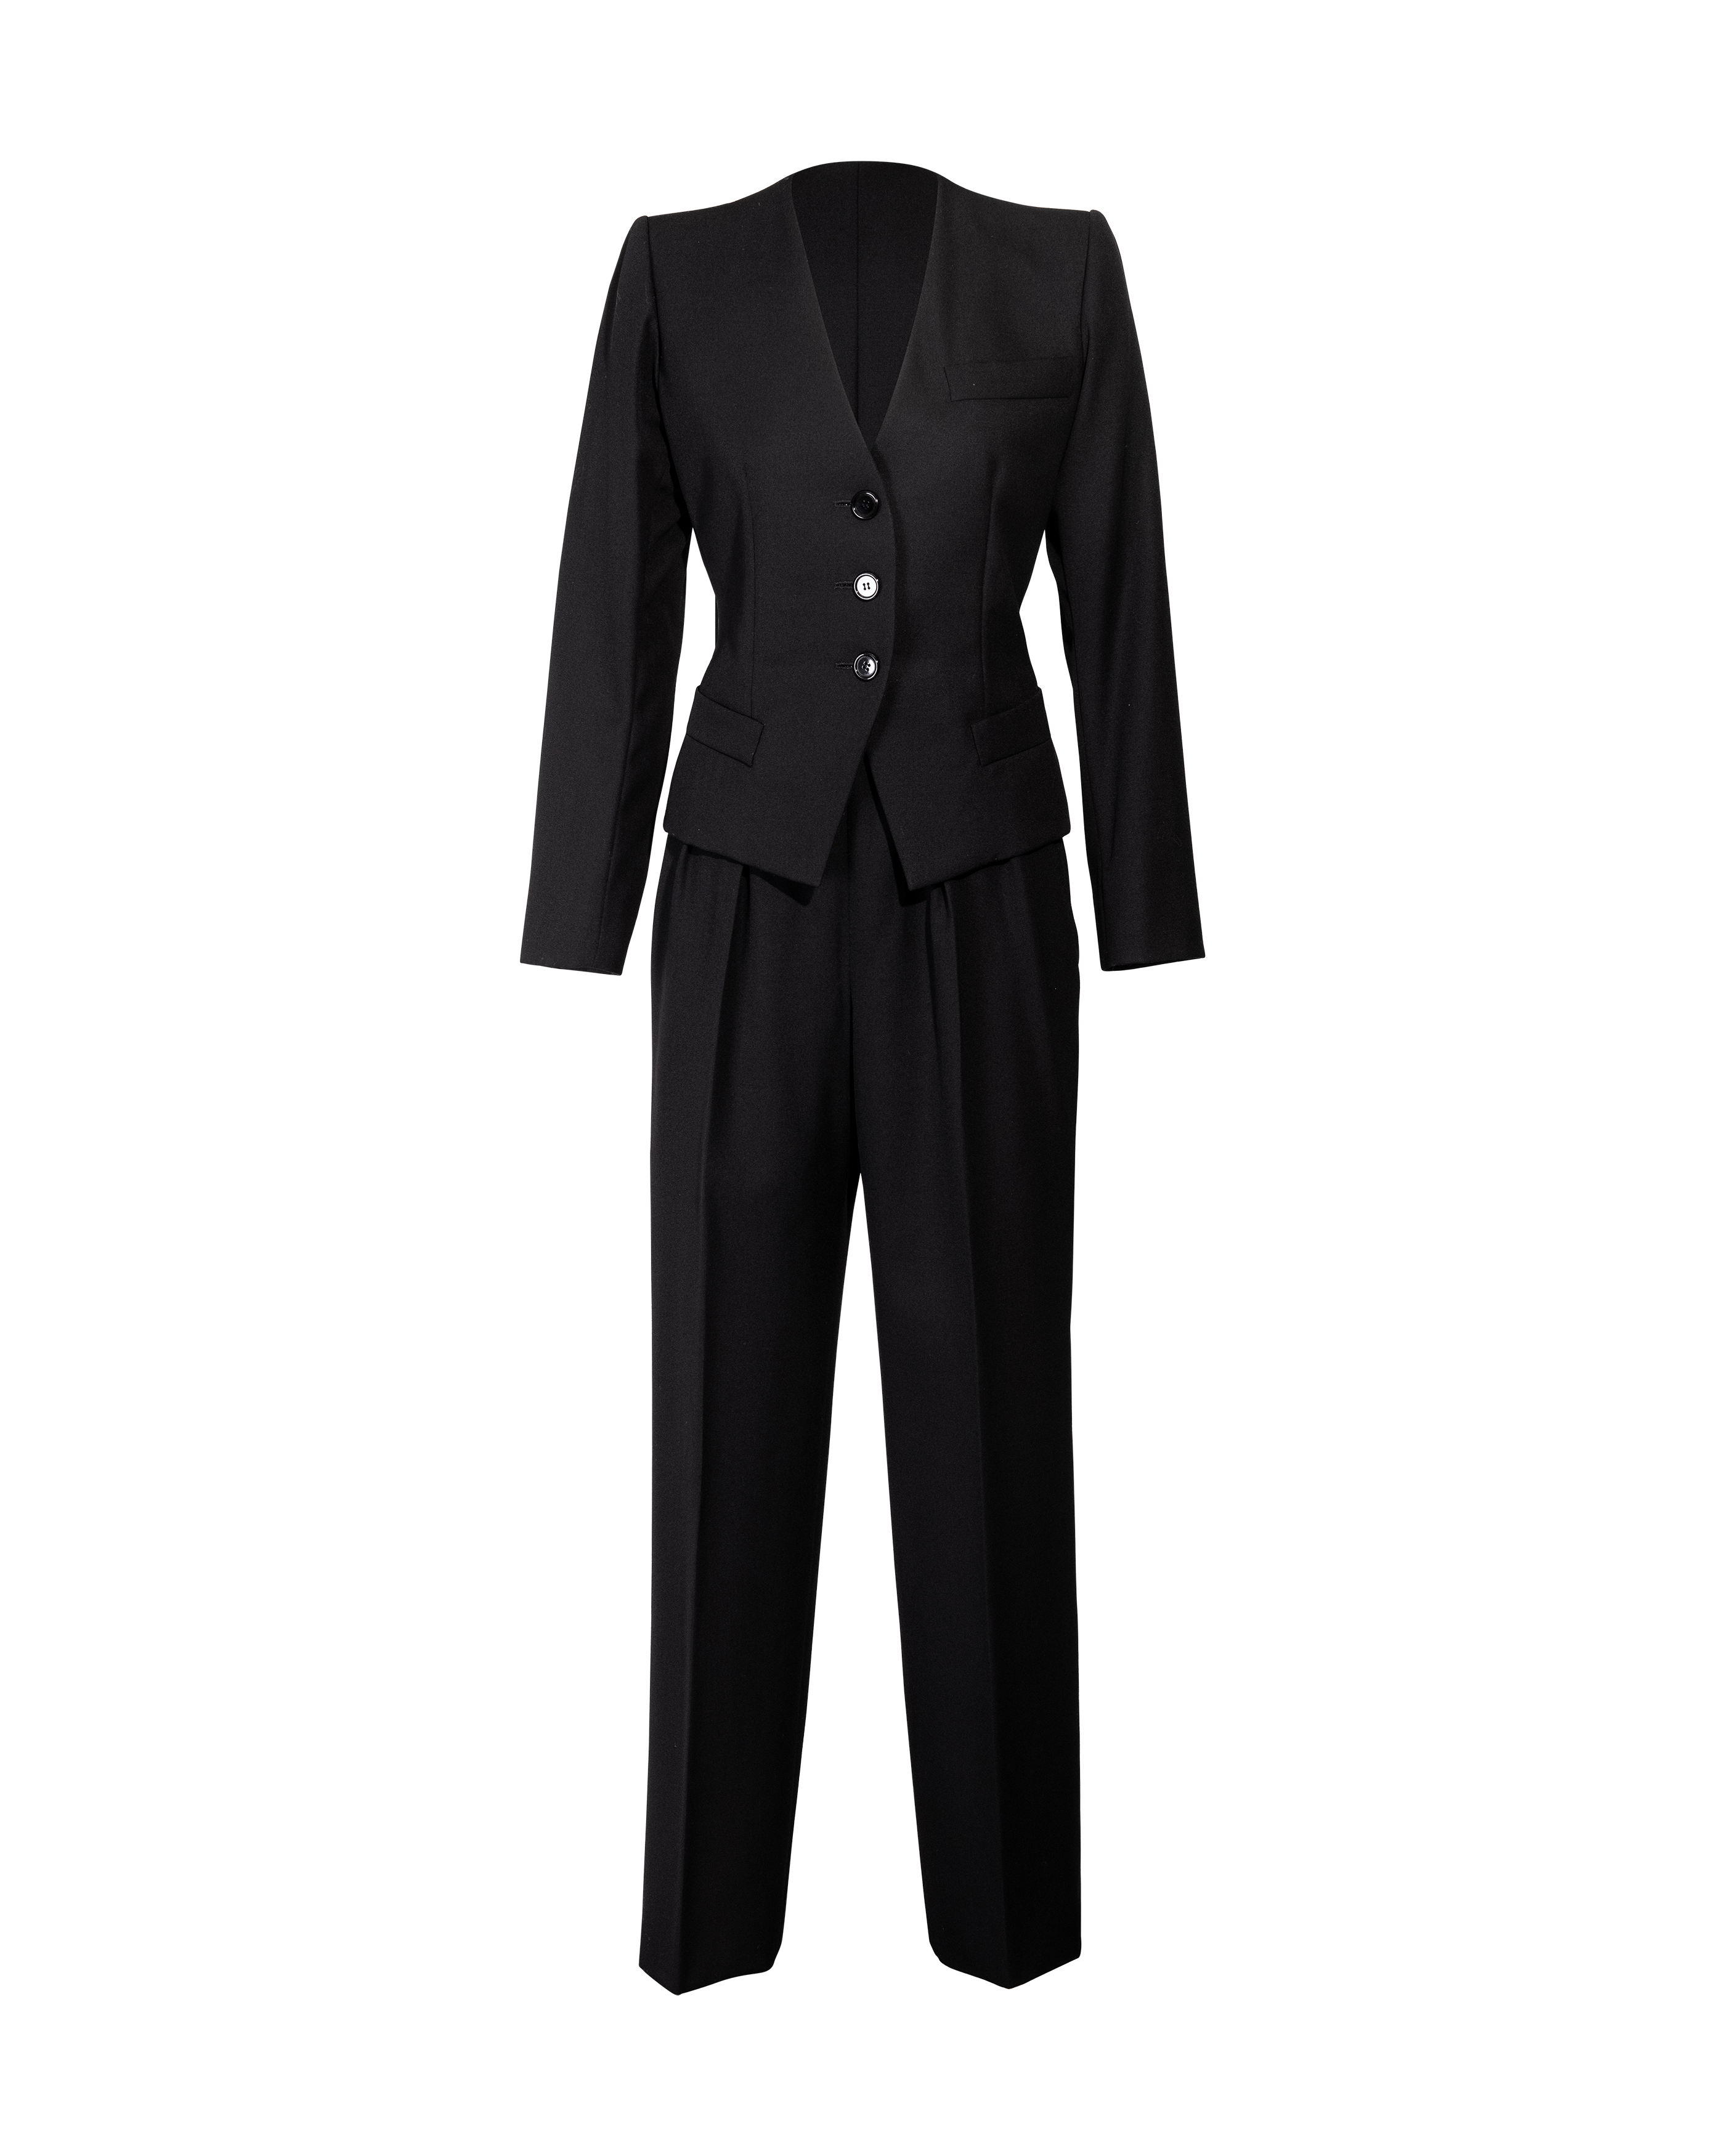 S/S 1999 Haute Couture Black Wool Pant Suit